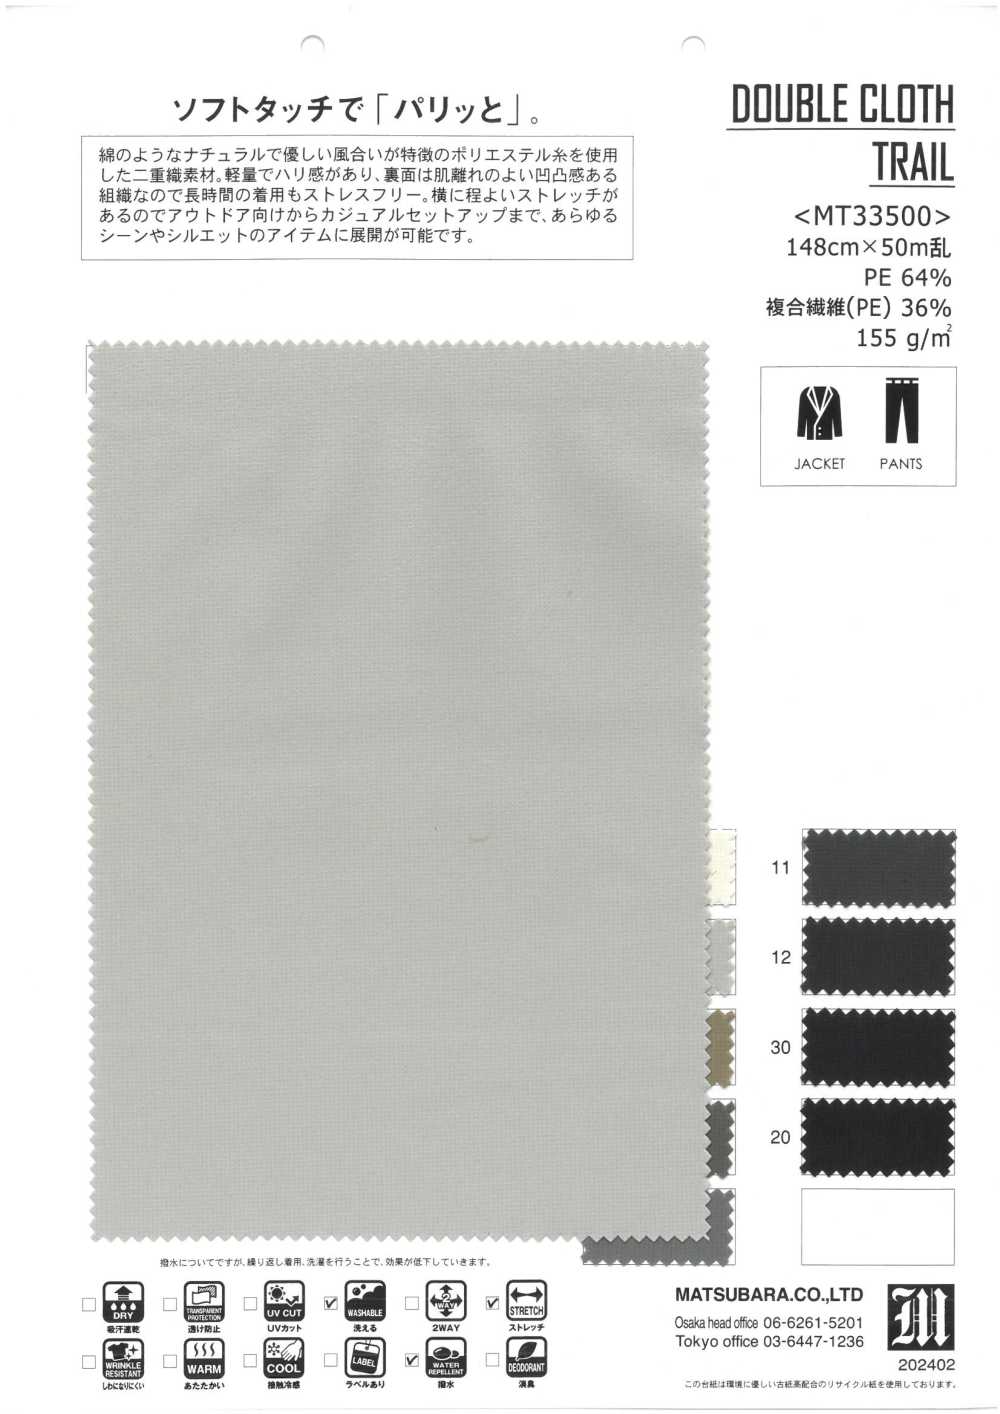 MT33500 DOUBLE CLOTH TRAIL[Textile / Fabric] Matsubara